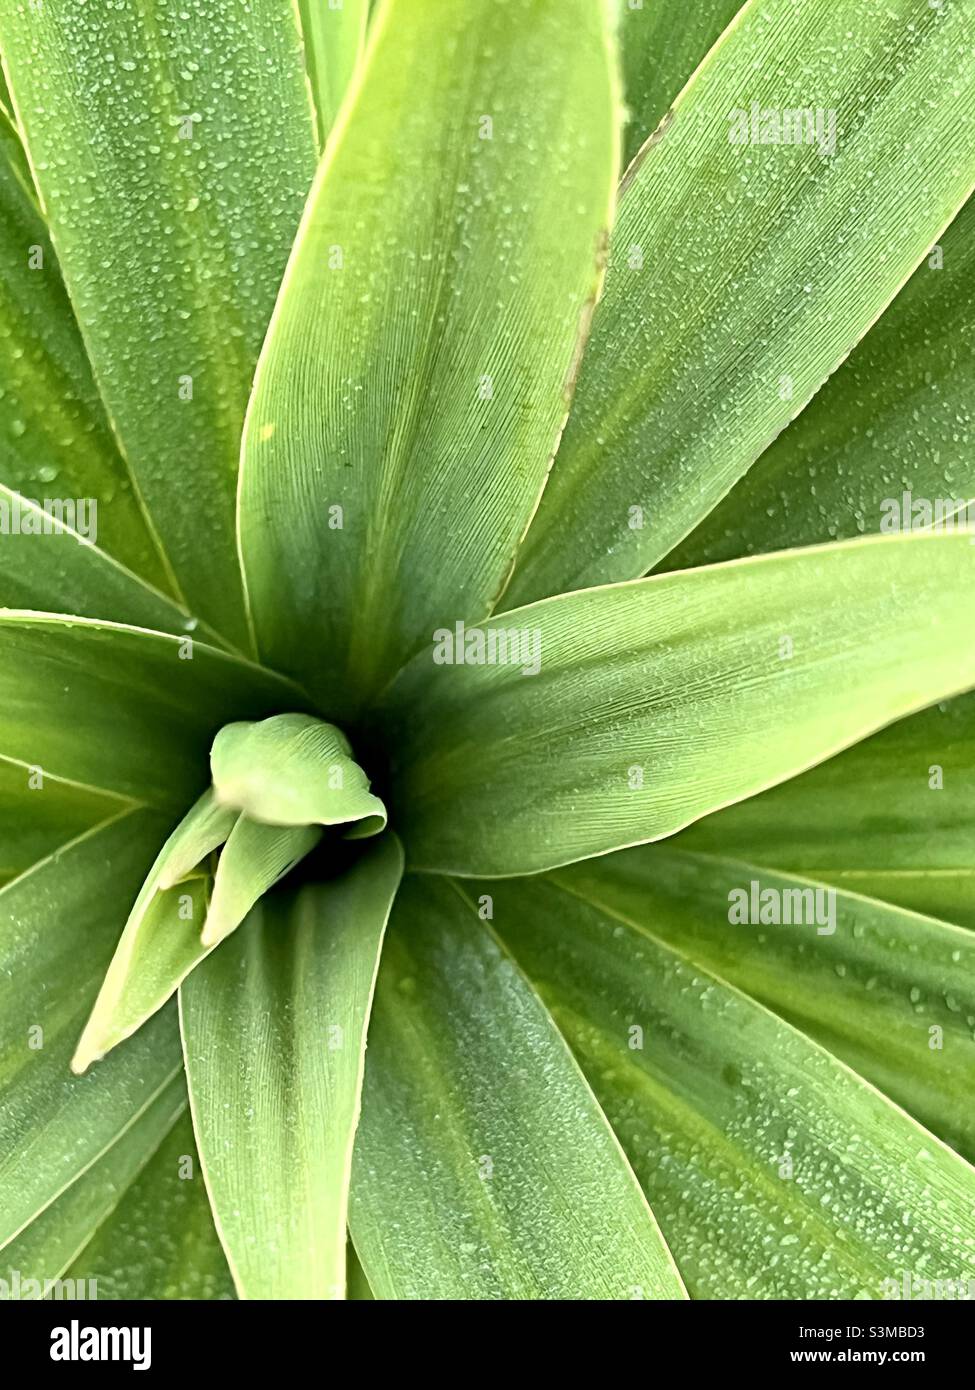 Raindrops on leafy plant Stock Photo